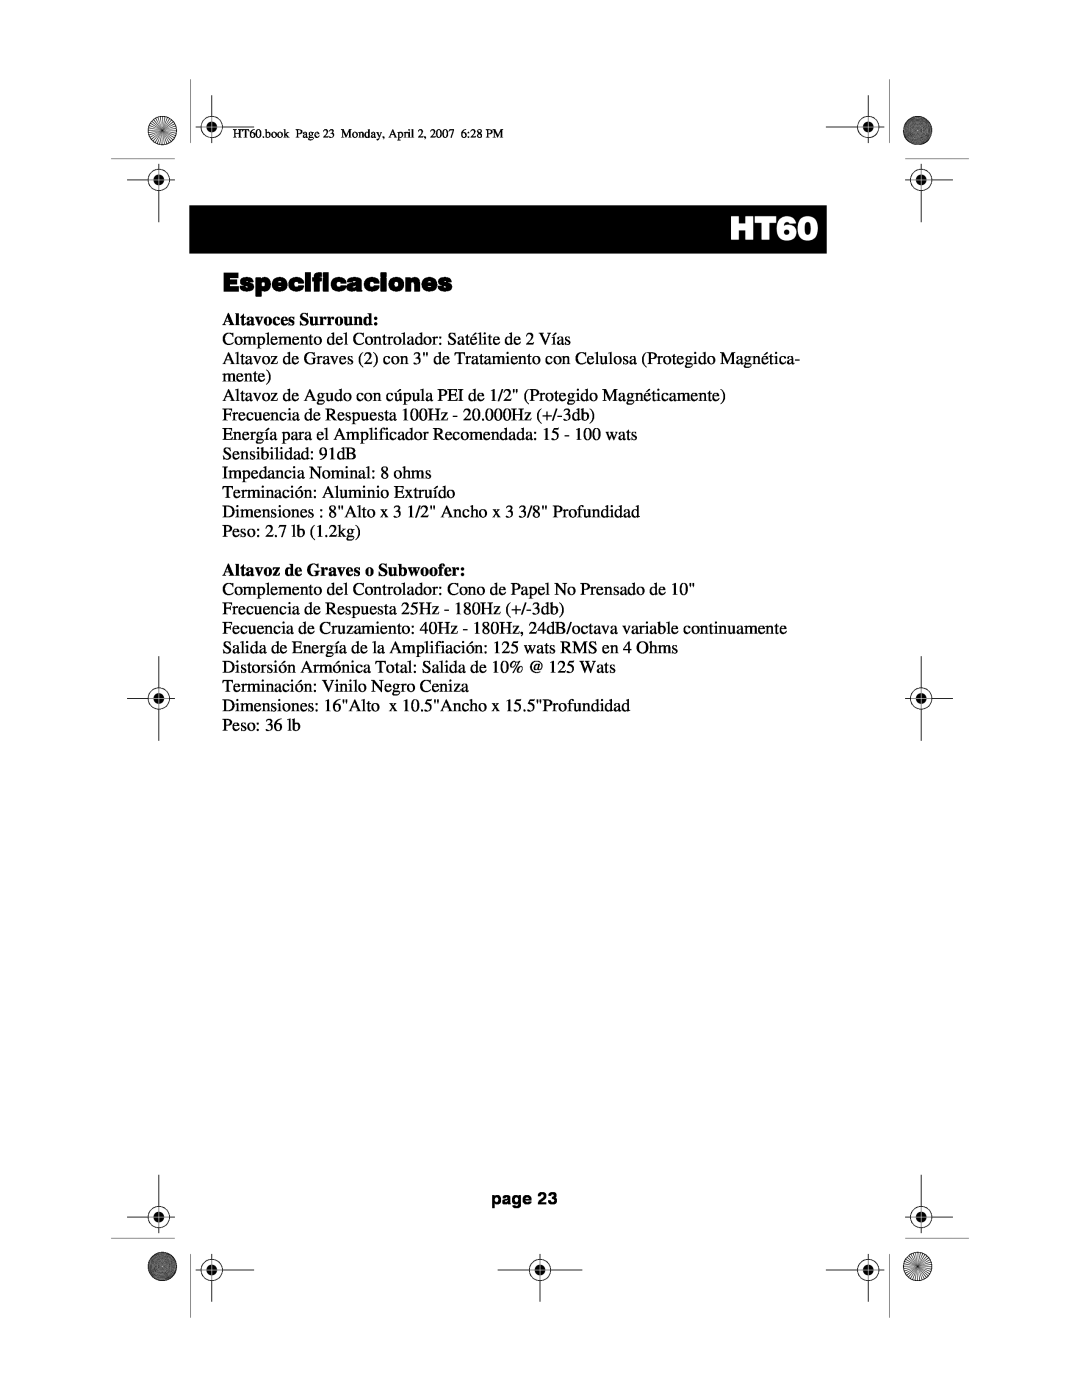 Acoustic Research HT60 operation manual Especificaciones, Altavoces Surround, Altavoz de Graves o Subwoofer, page 